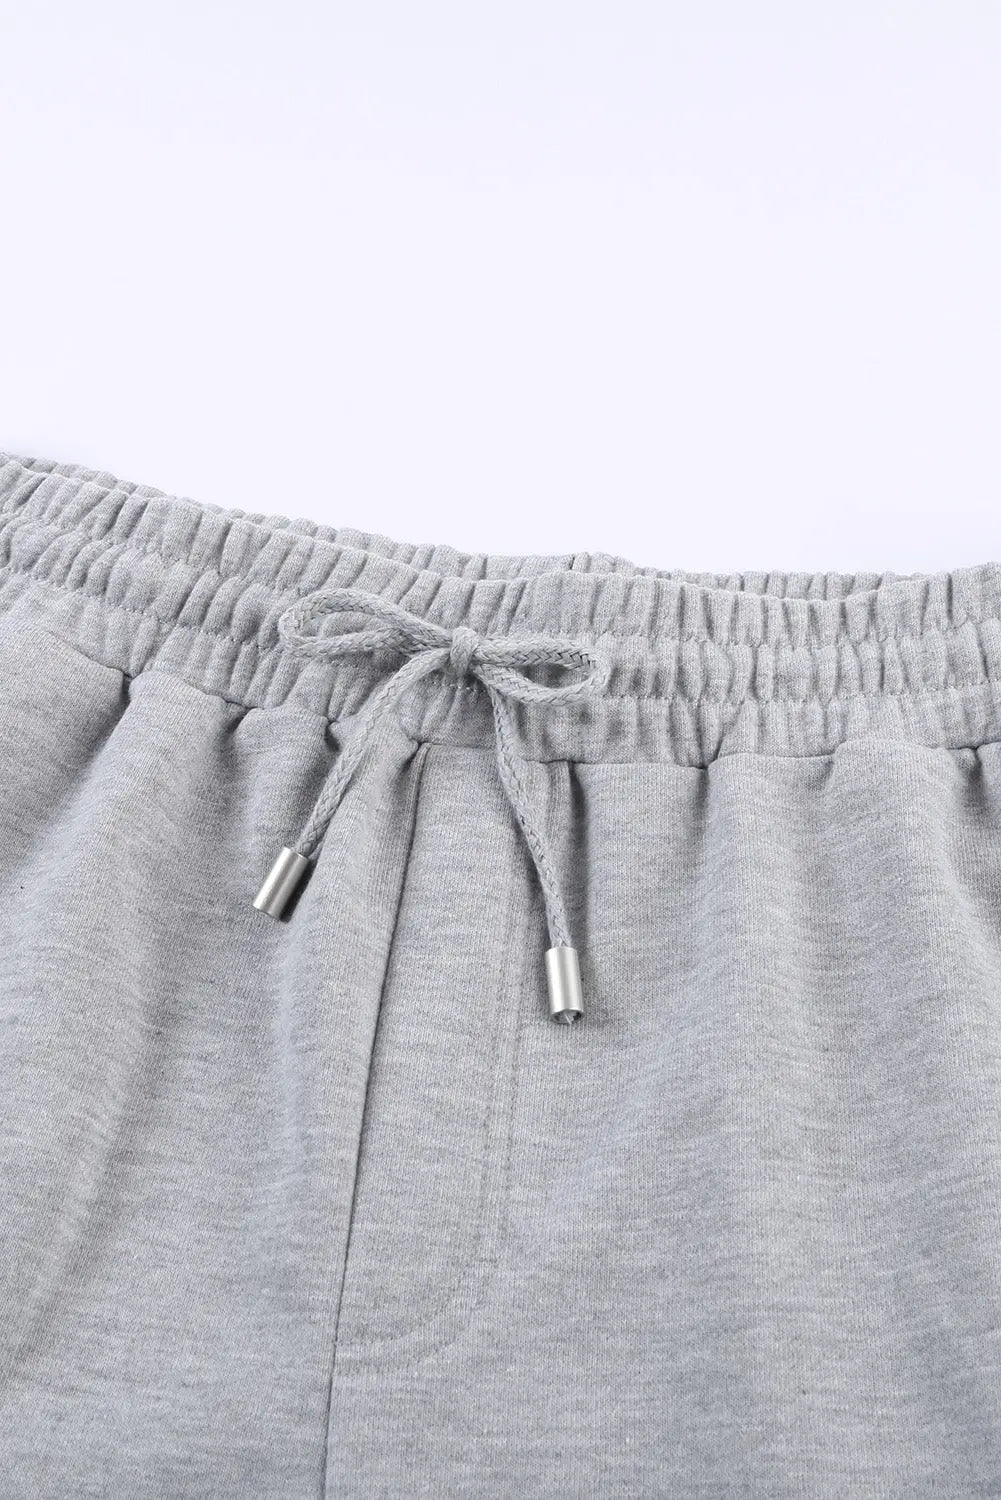 Gray tie waist side pockets cuffed lounge shorts